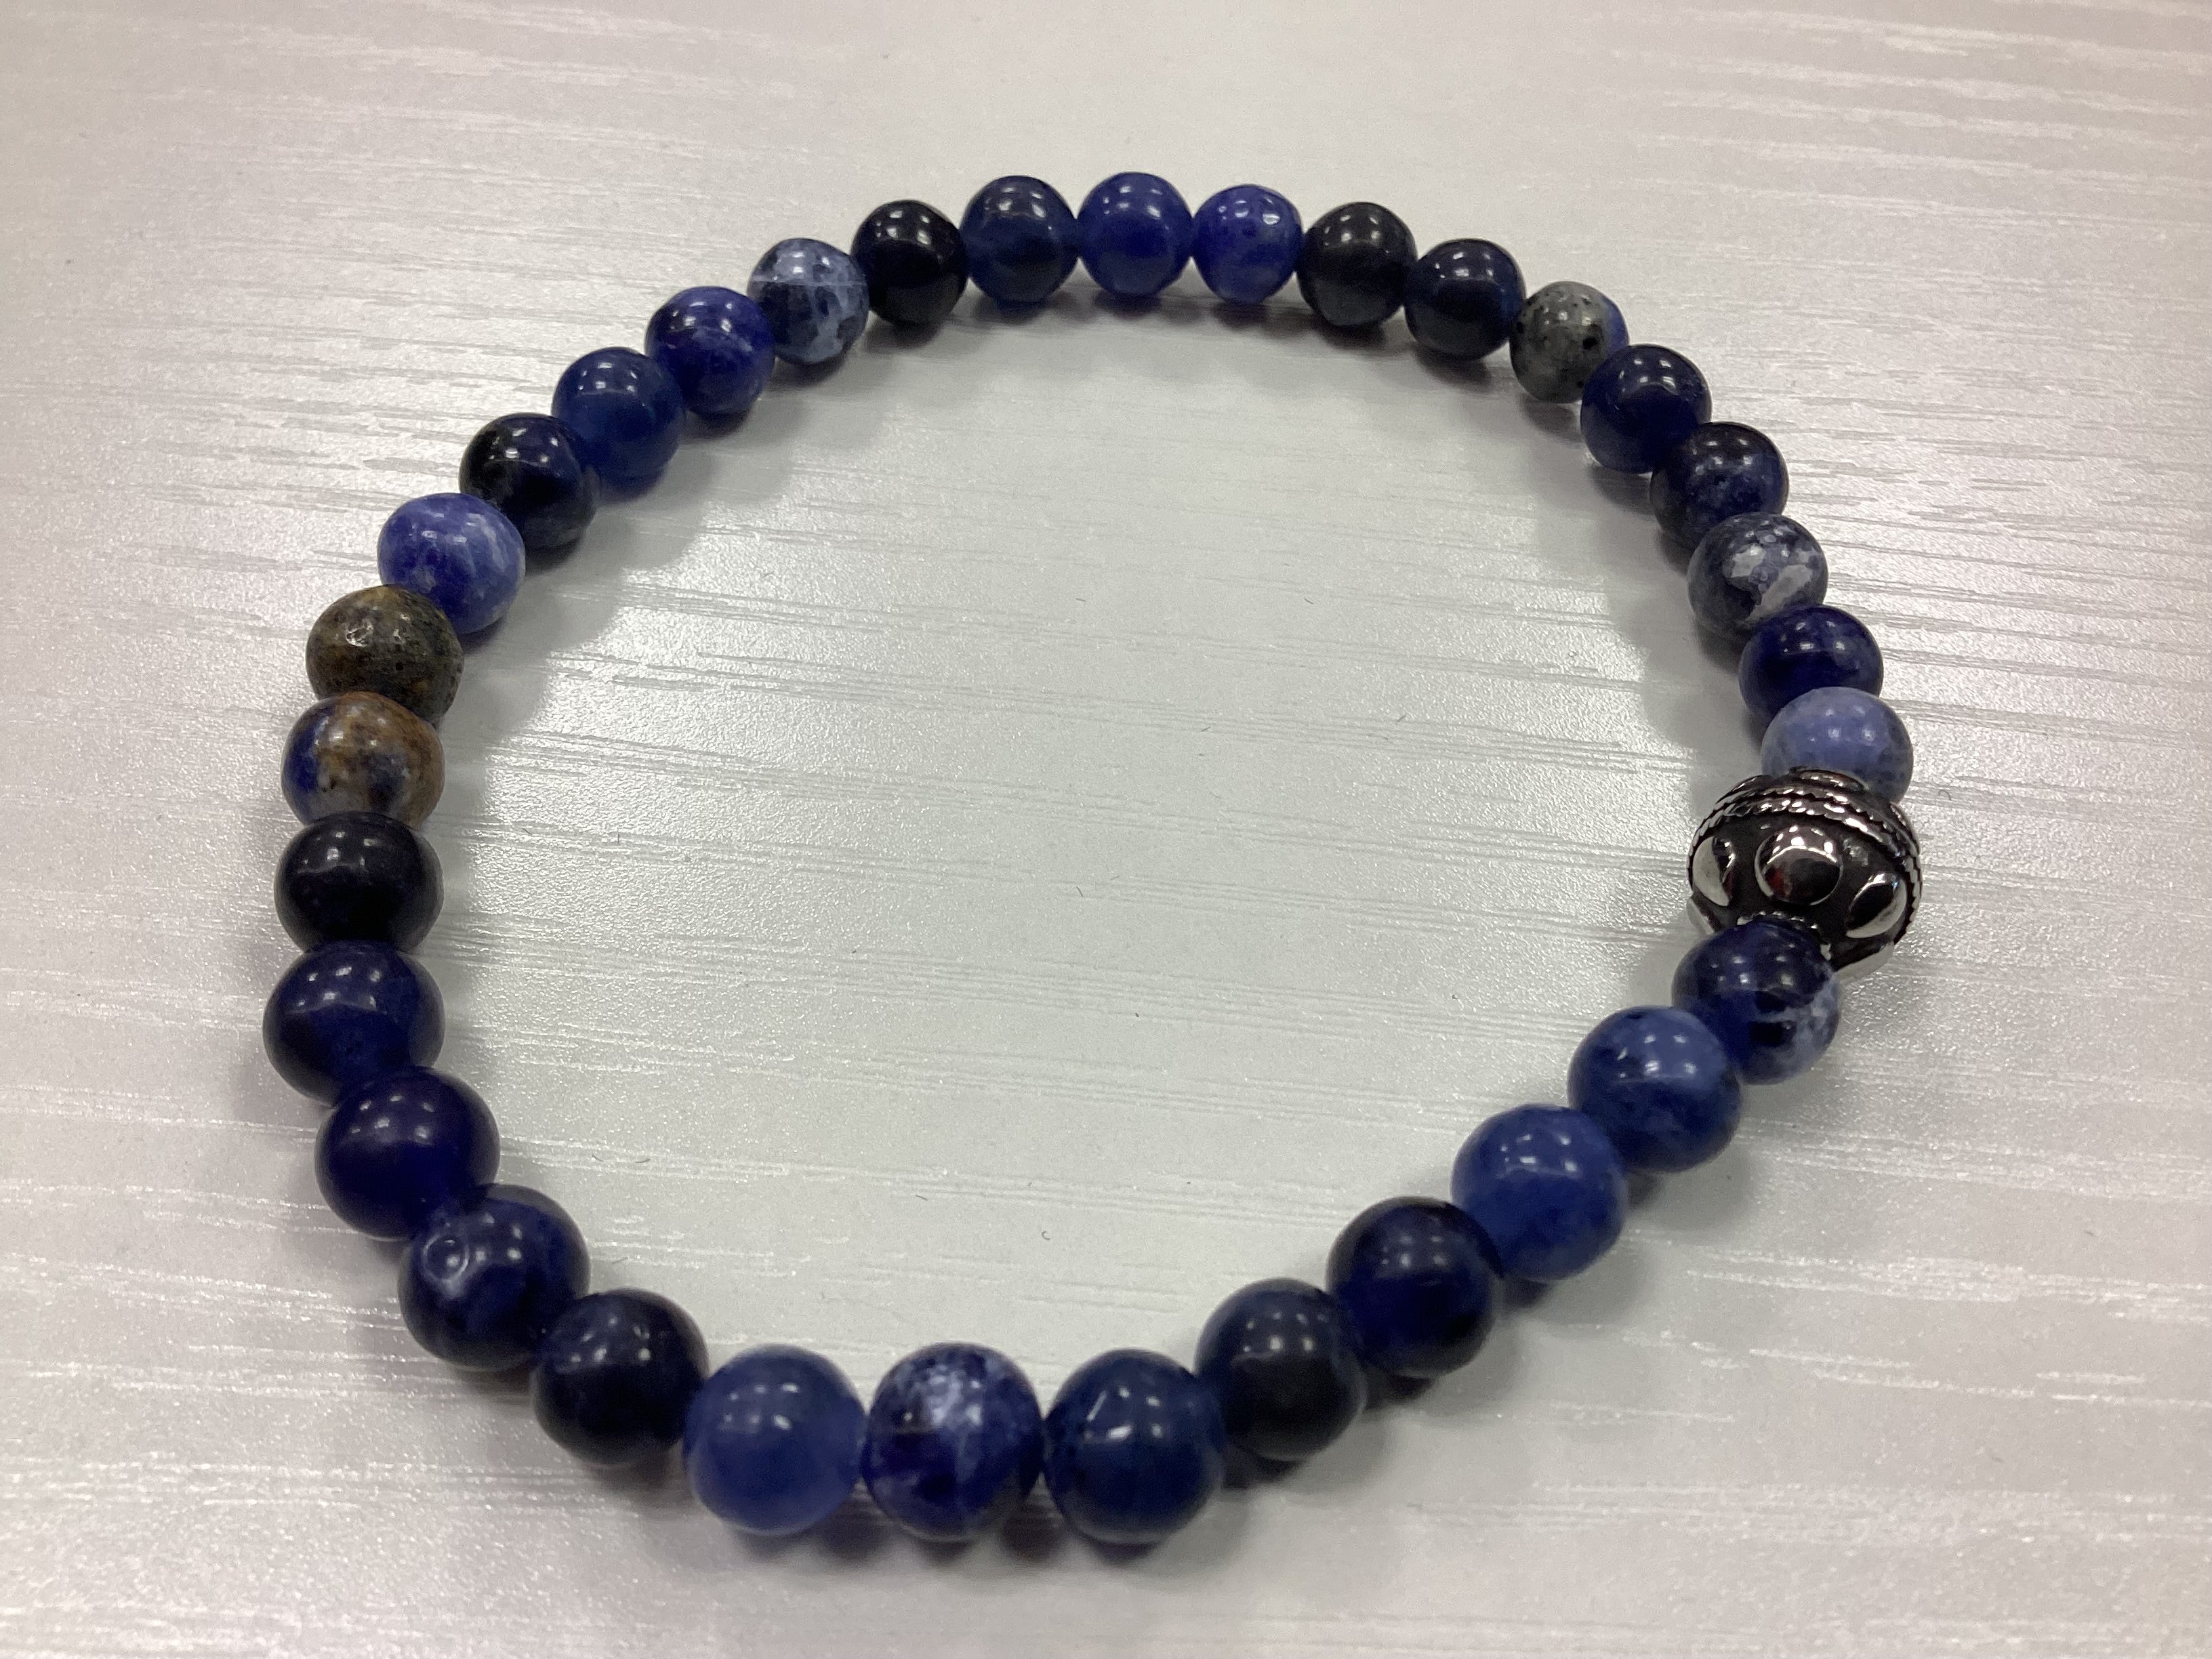 Small Beads Bracelet